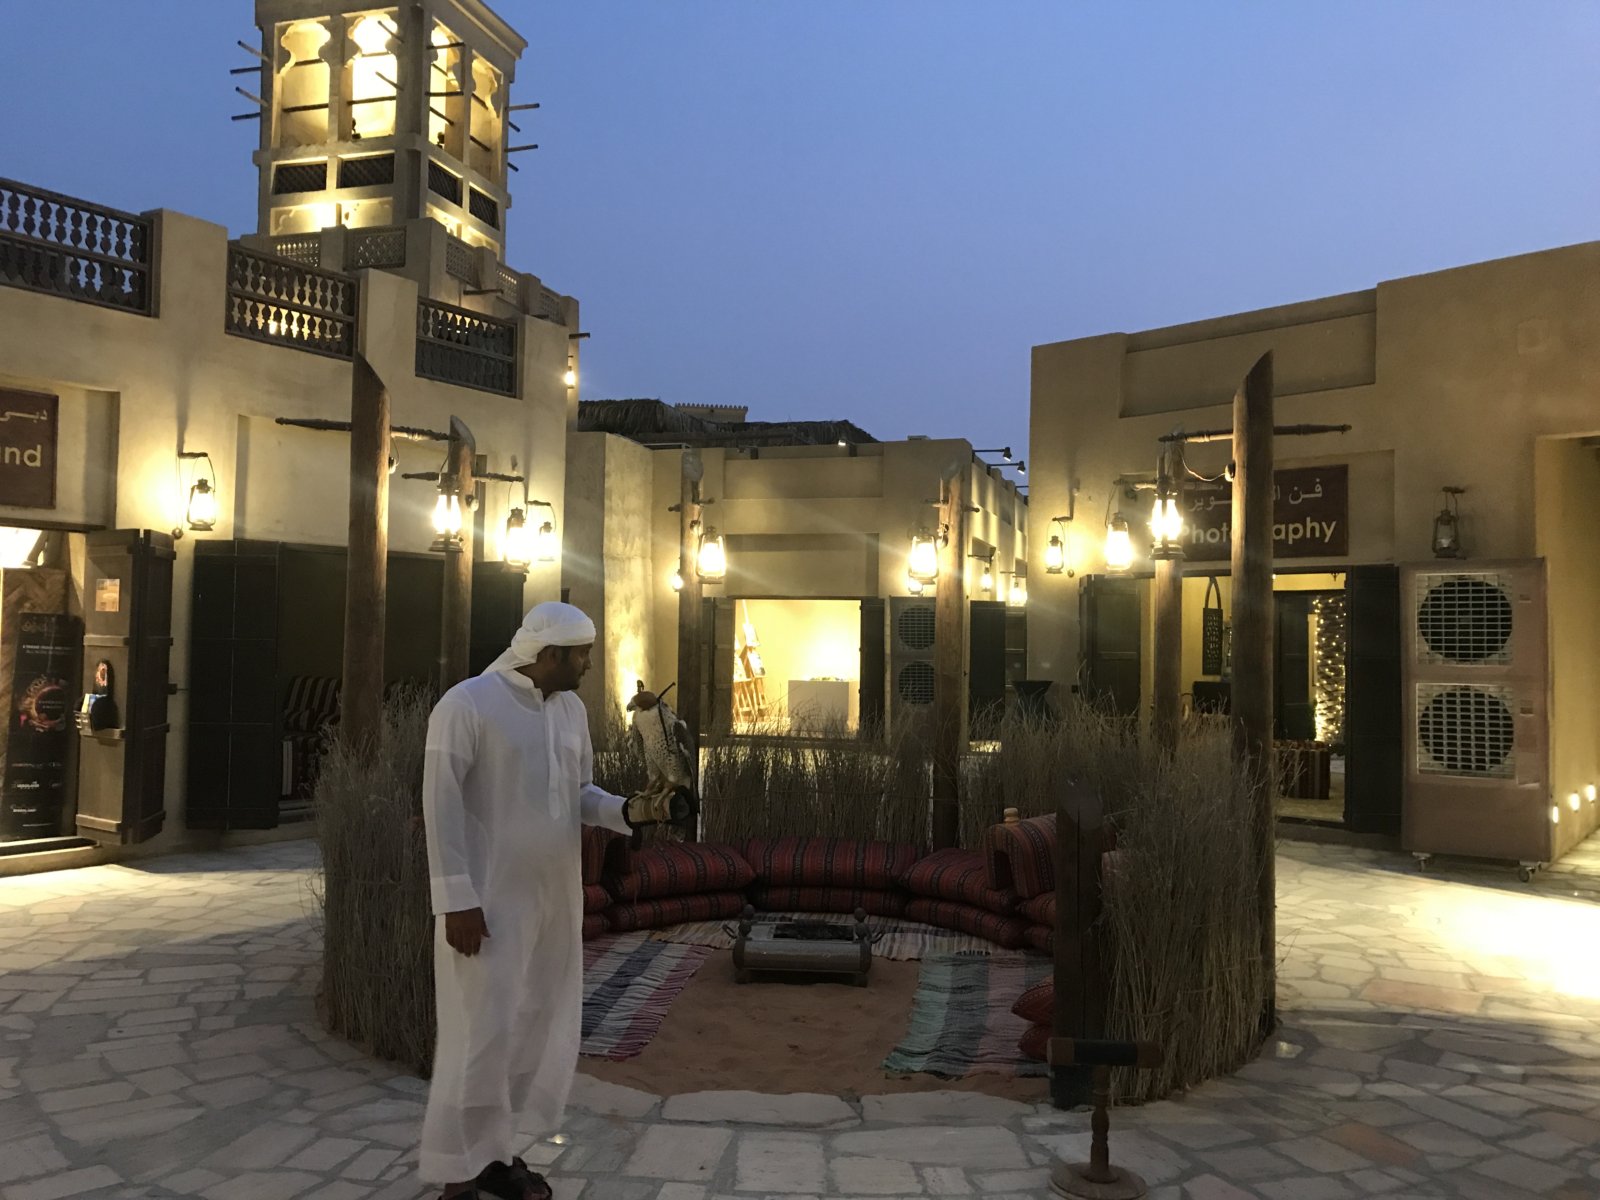 Dubai during Ramadan